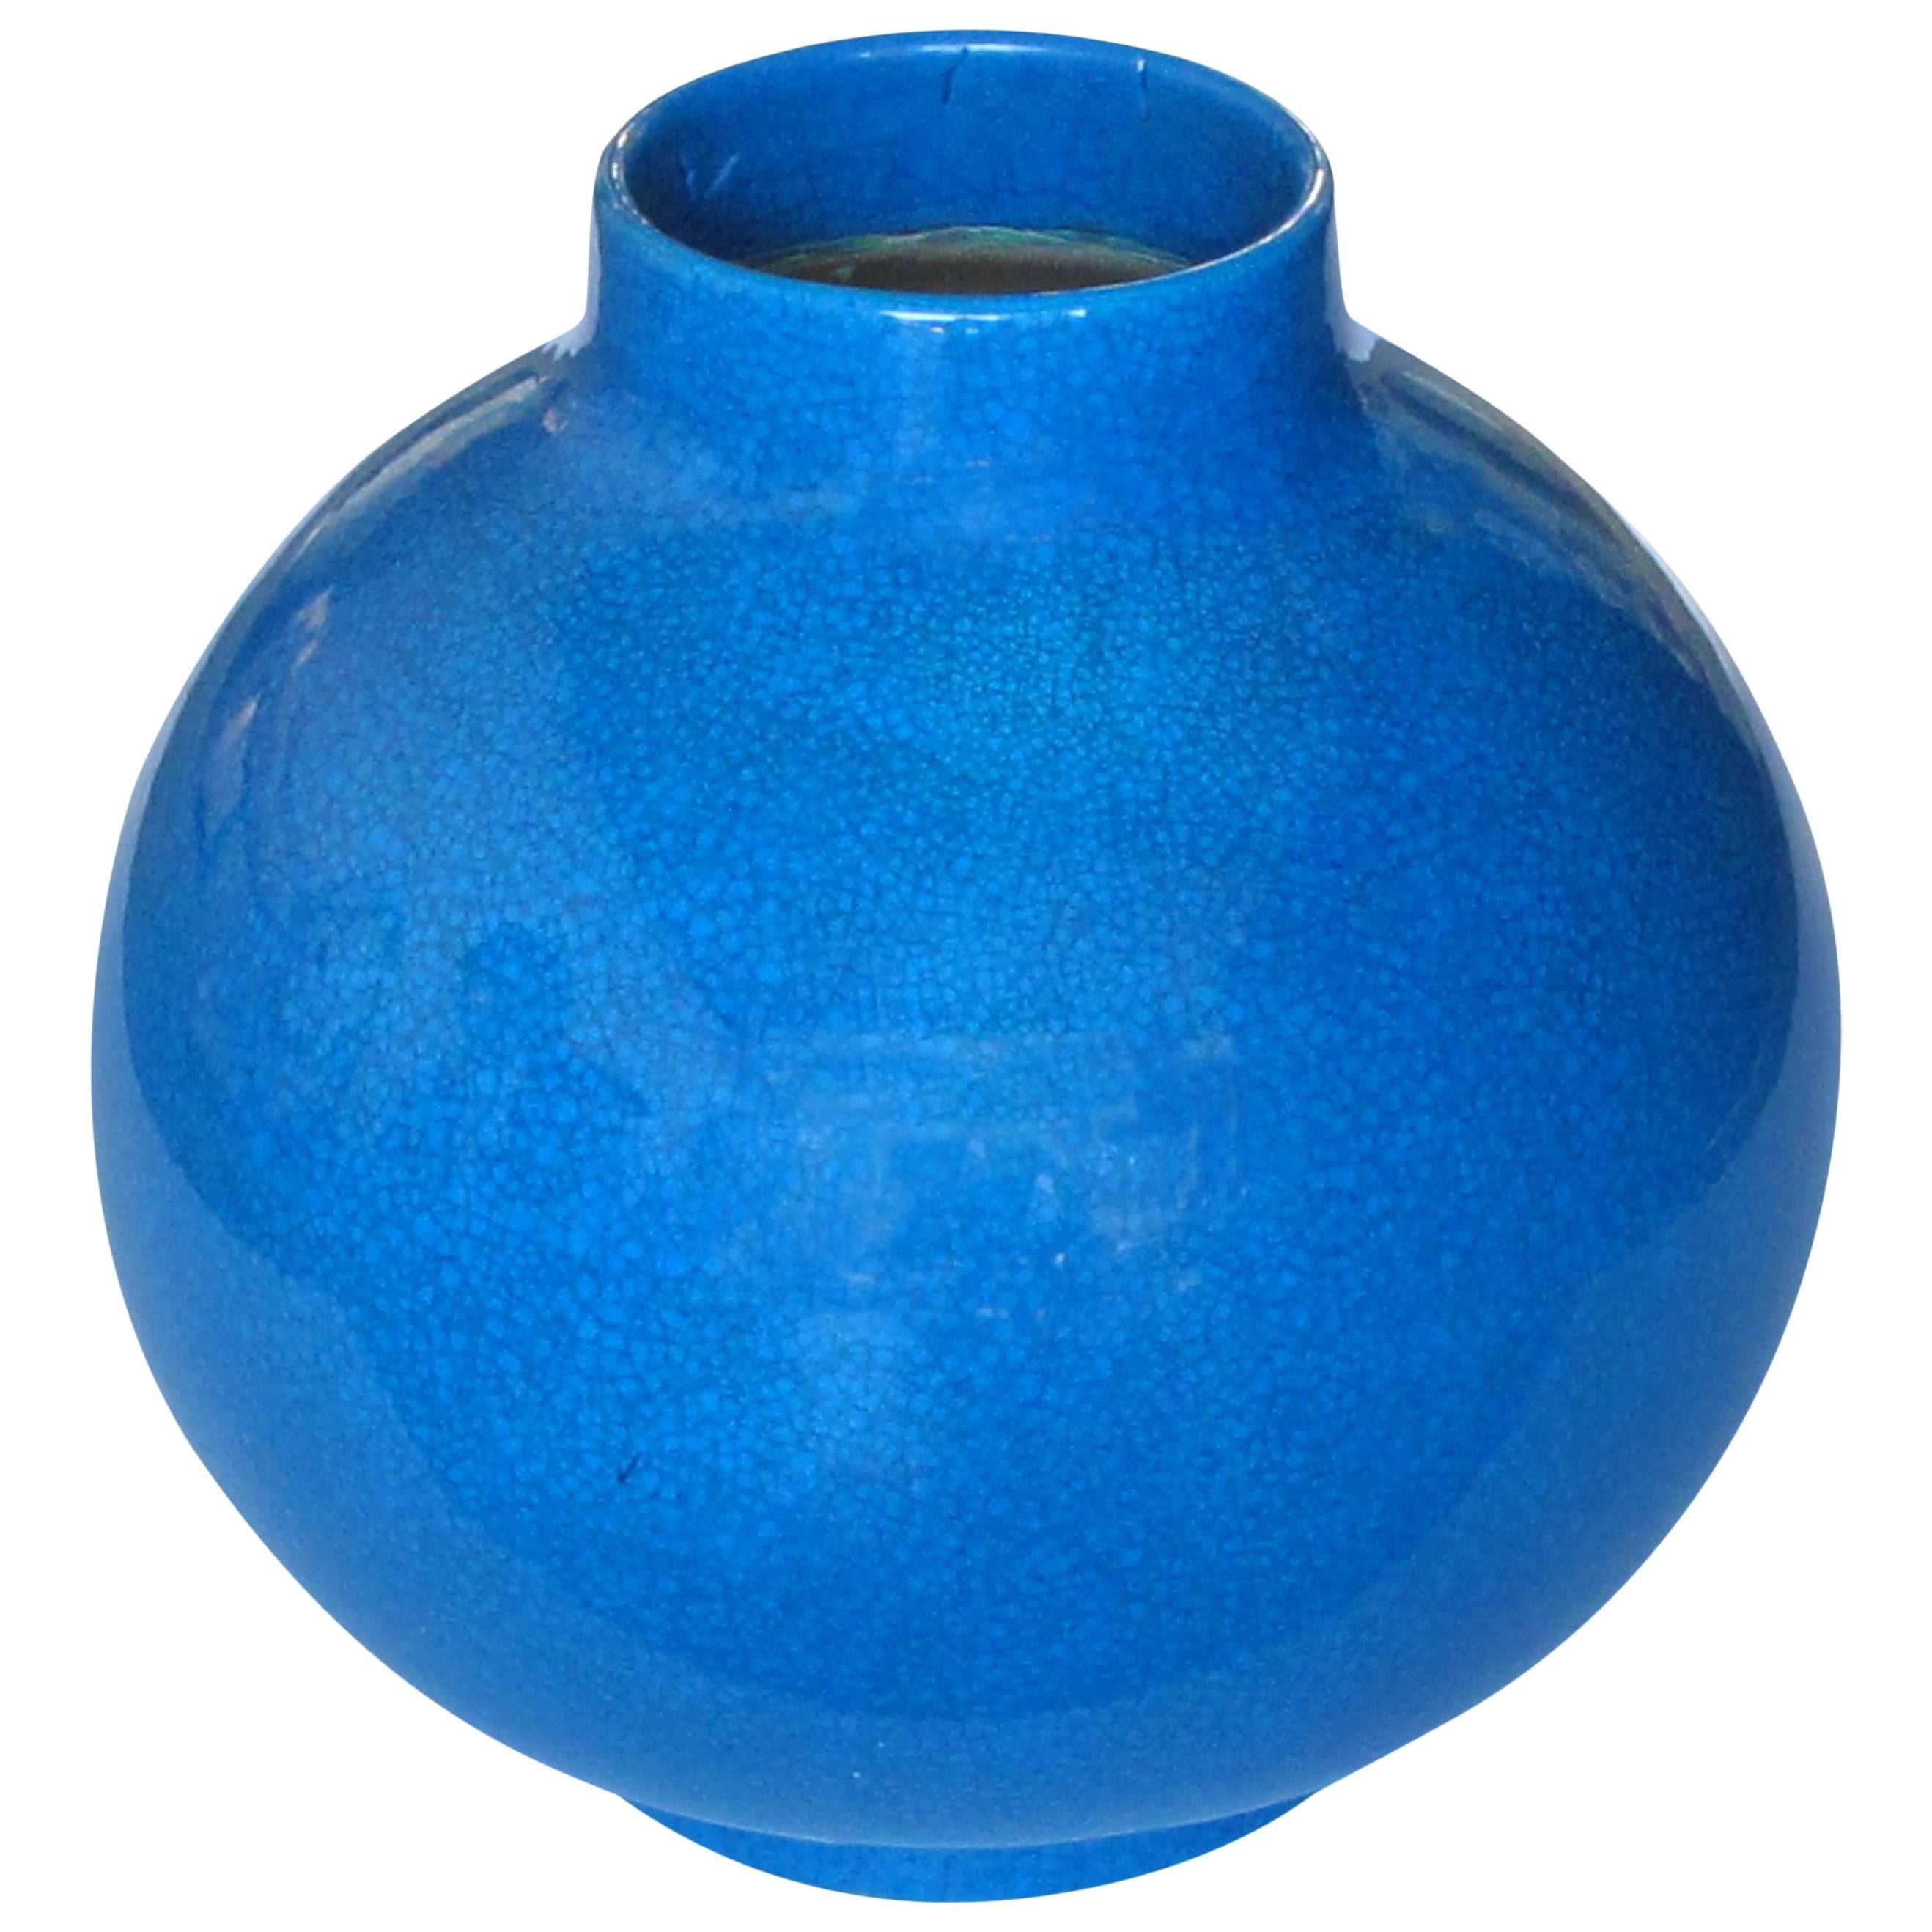 Good Quality 1920s Crackle-Glazed Spheroid Vase by Boch Freres Keramis, Belgium